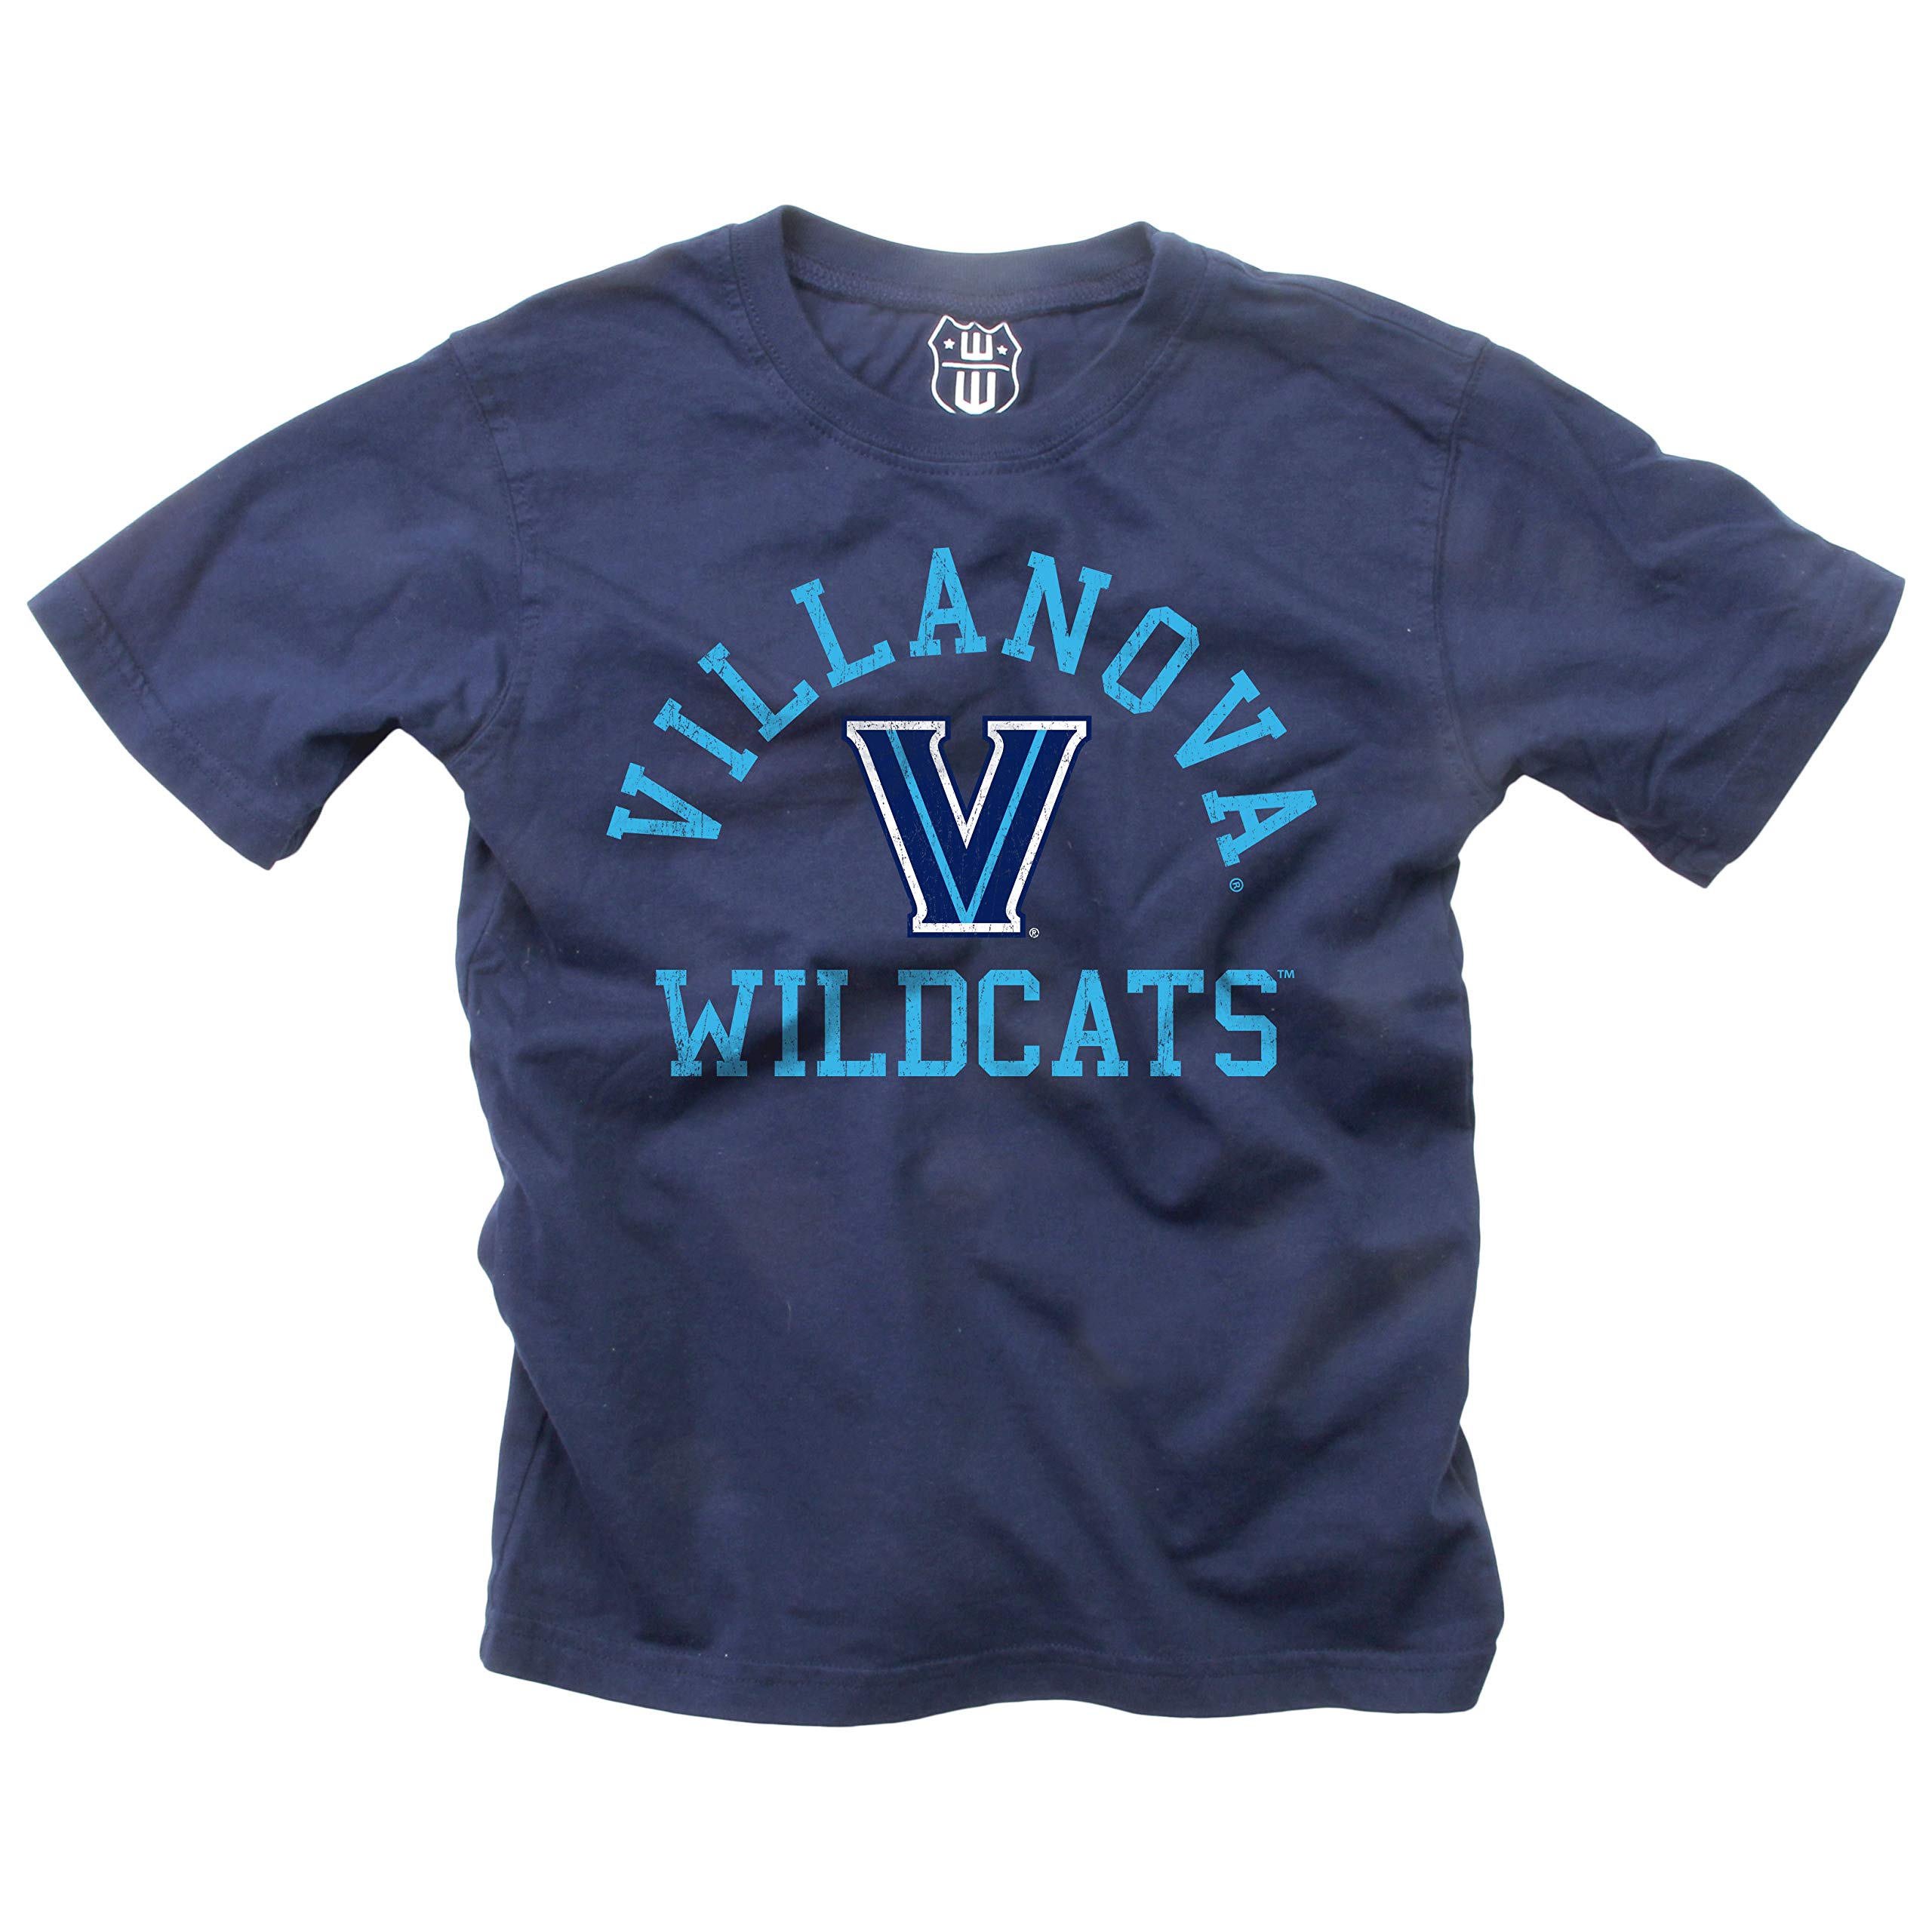 Wes and Willy NcAA Kids SS Organic cotton Tee Shirt, Villanova Wildcats, Midnight, M